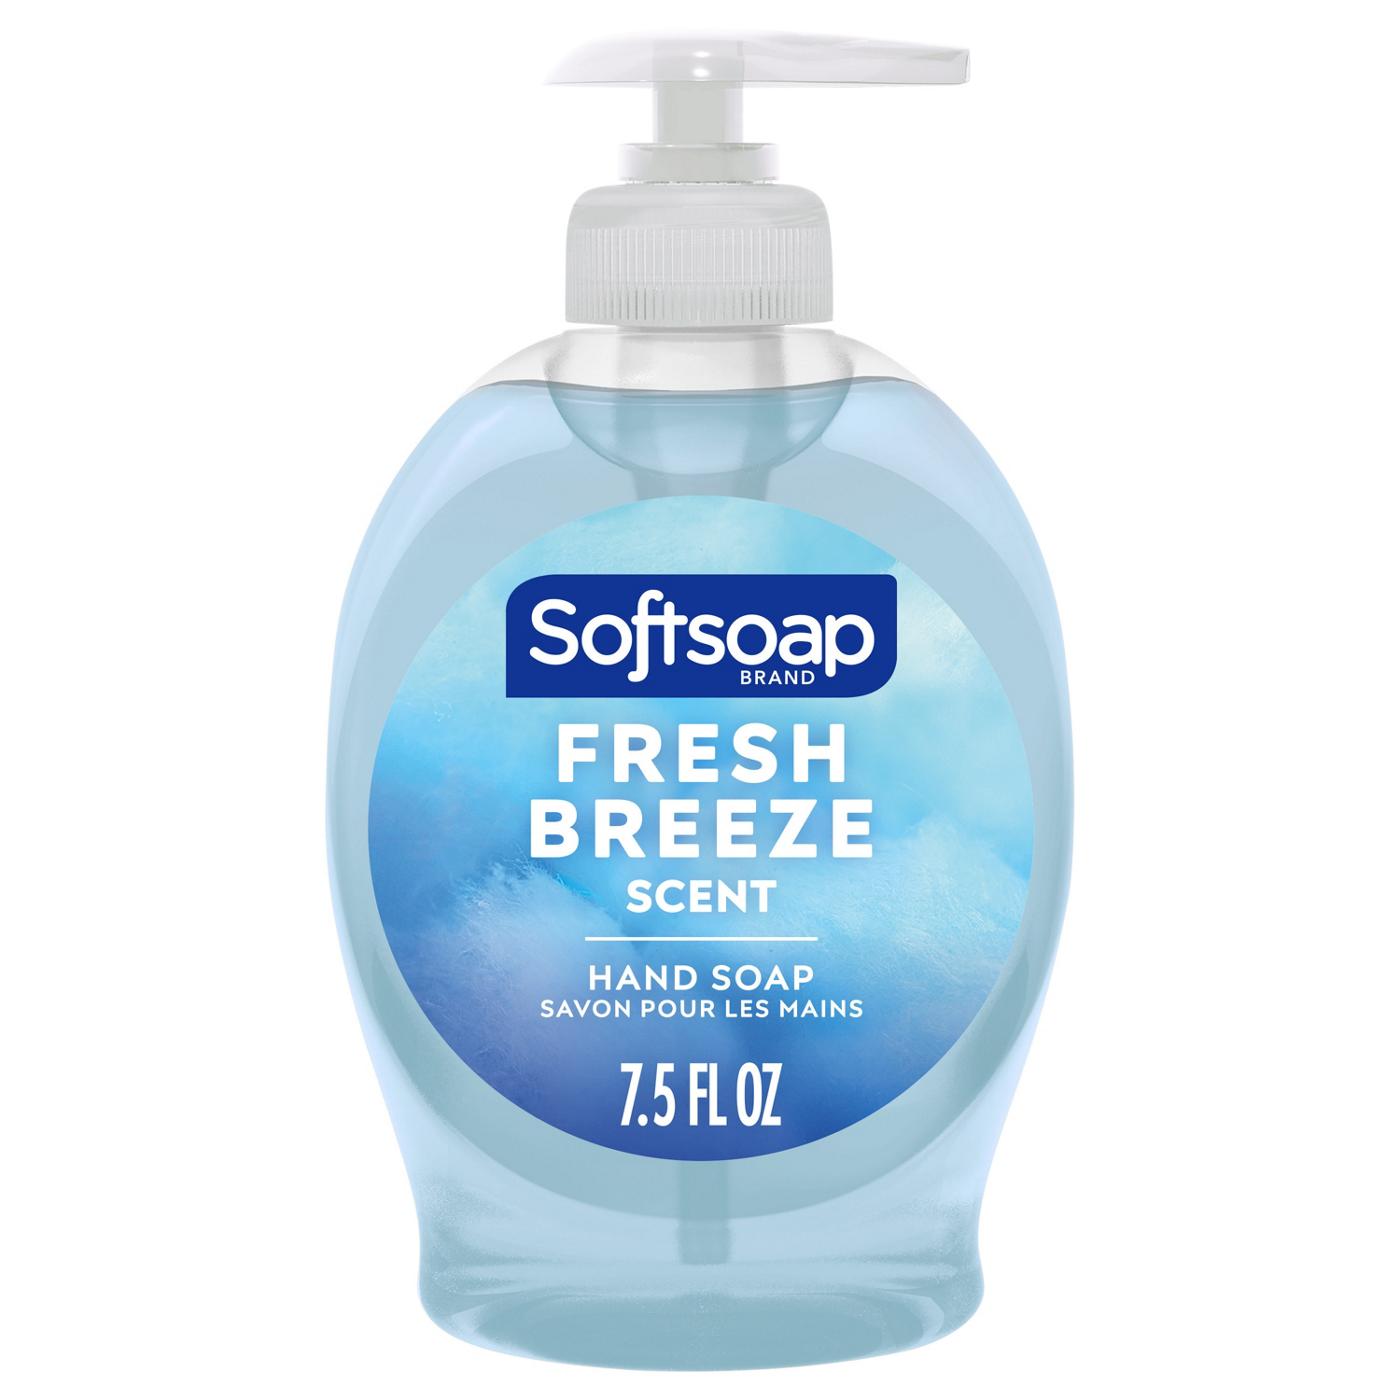 Softsoap Hand Soap - Fresh Breeze; image 1 of 8